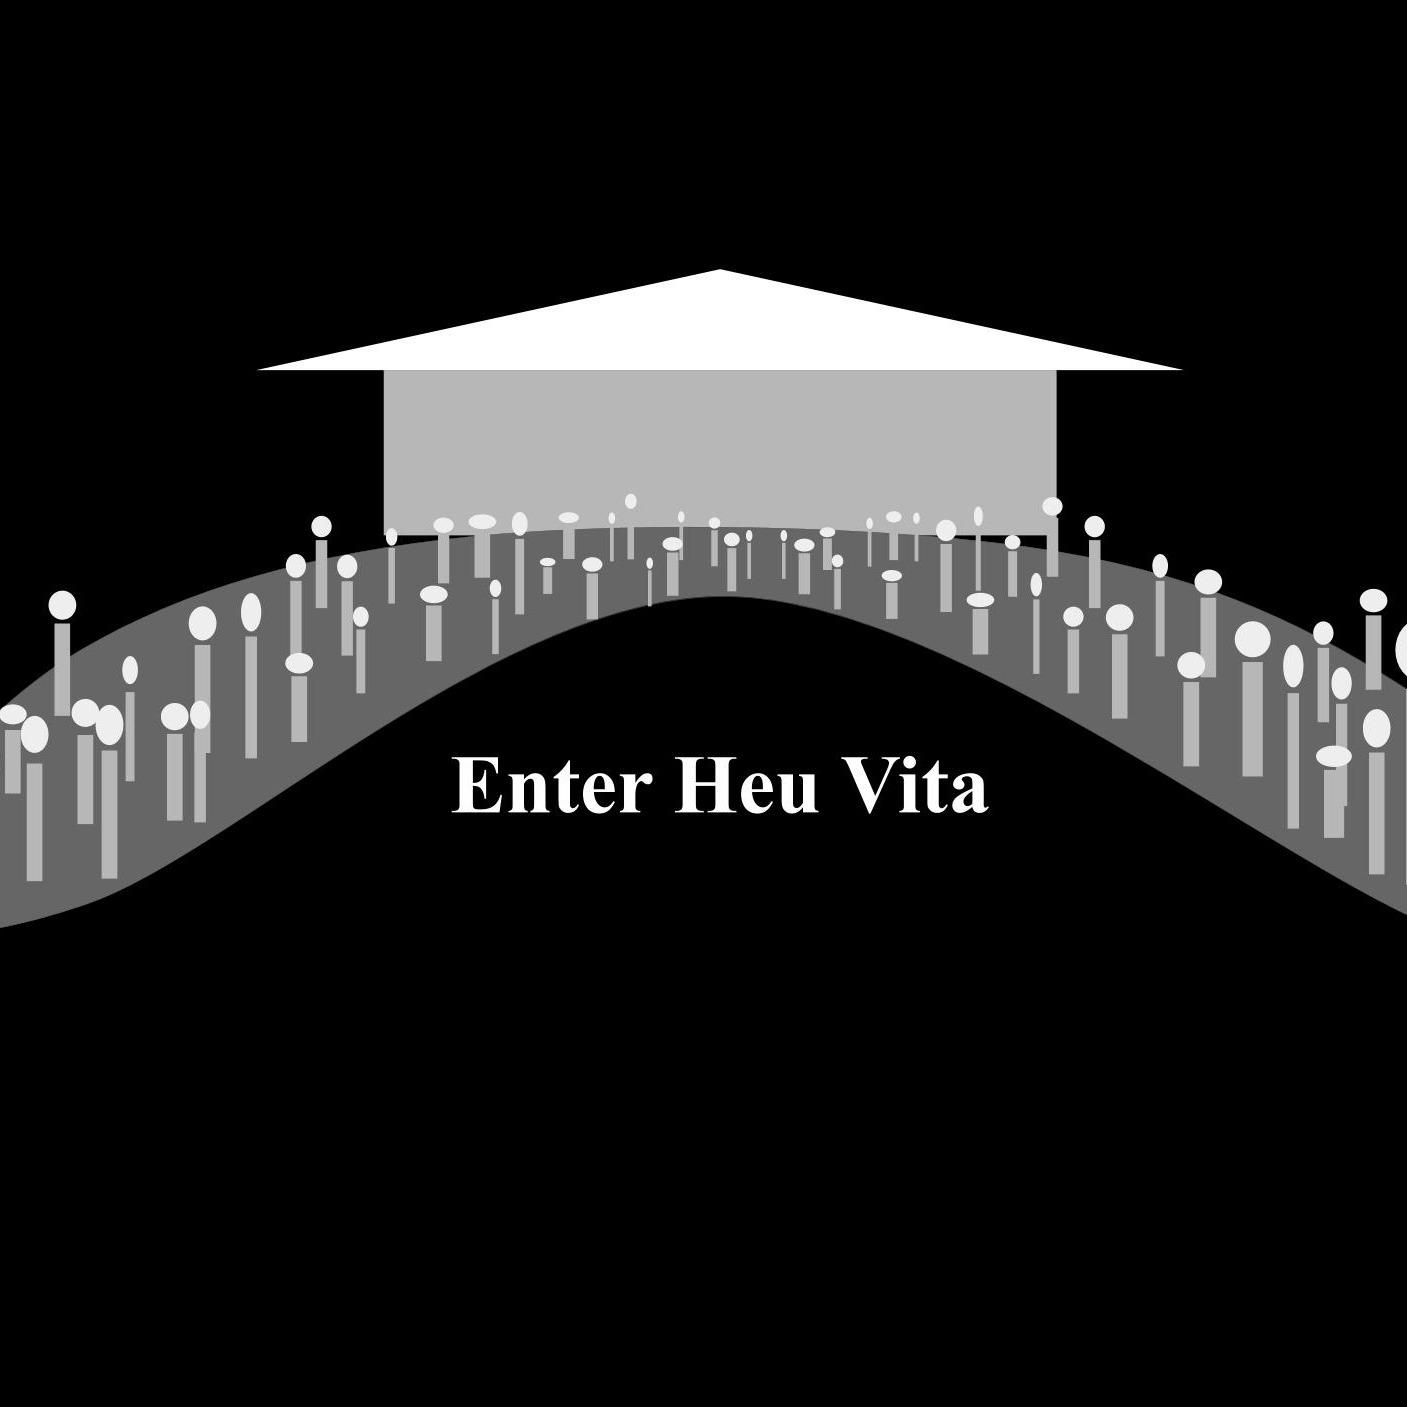 Enter Heu Vita